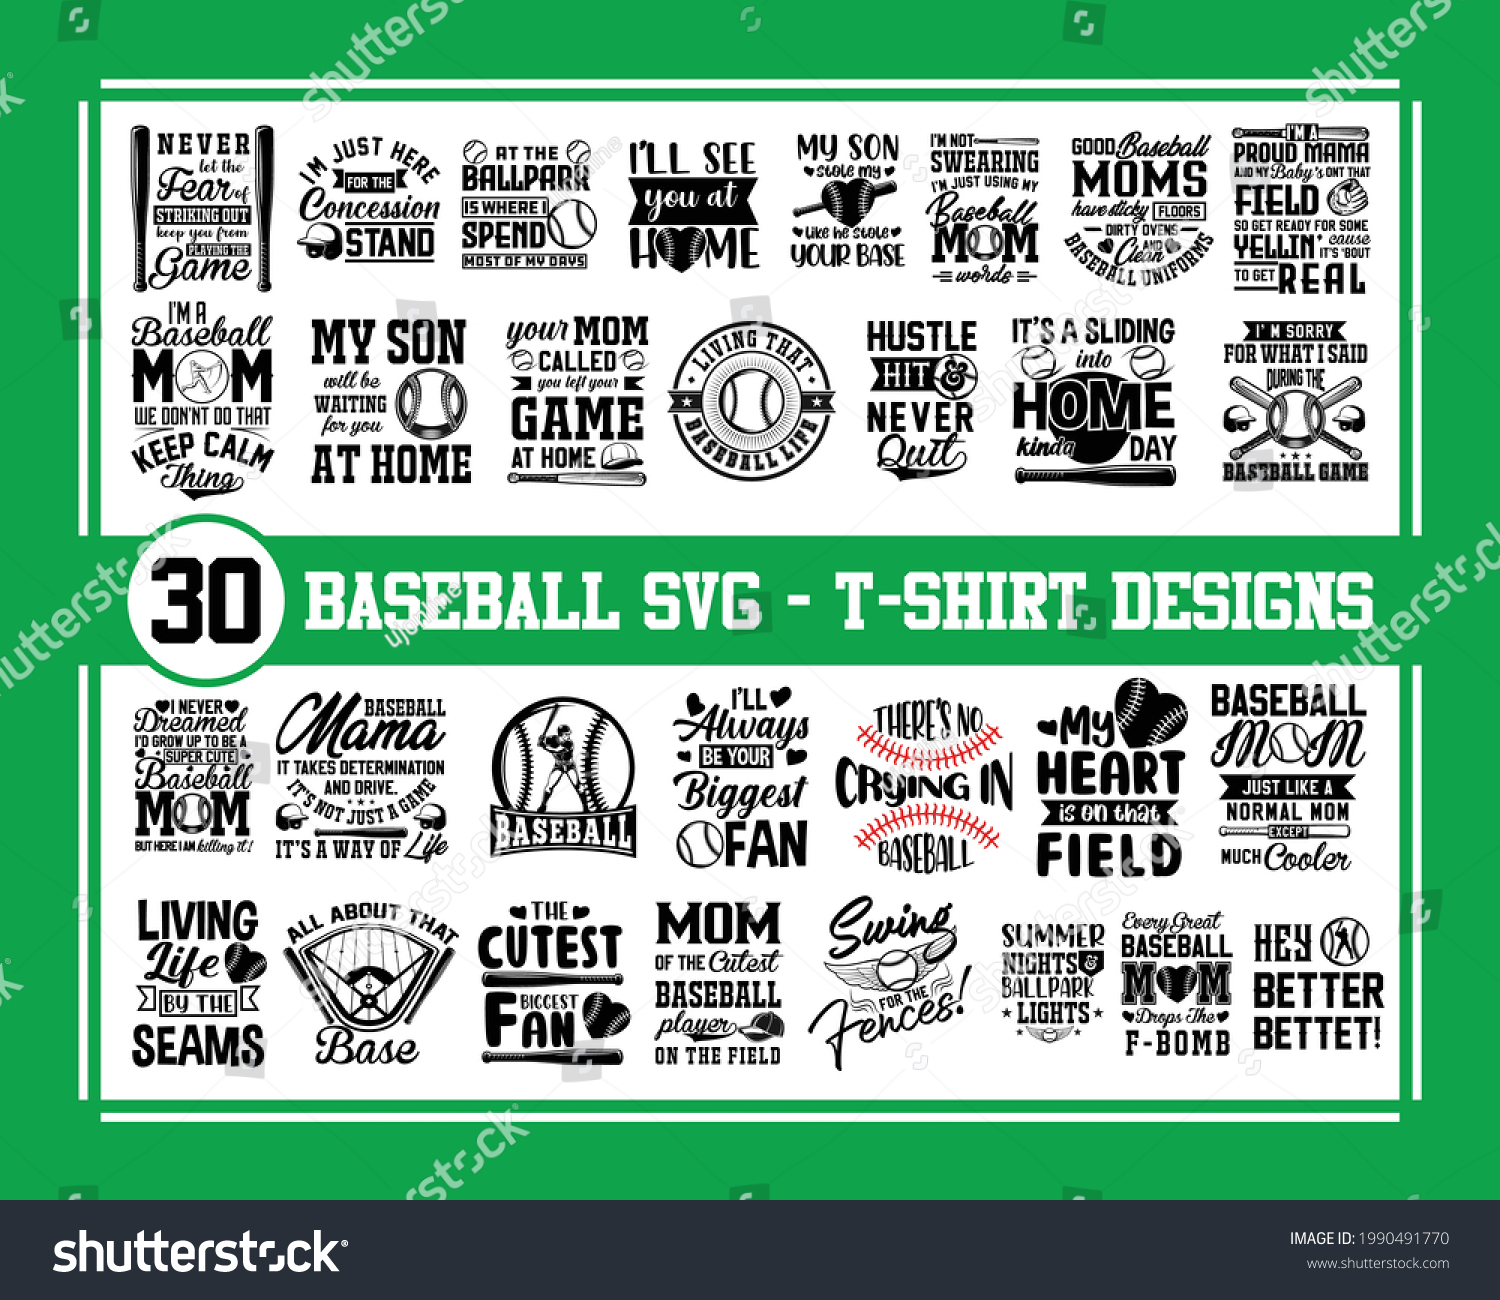 SVG of Baseball quotes, Baseball Vectors, Baseball Designs, Game Day, Home Run, Mom, game season, baseball SVGs svg